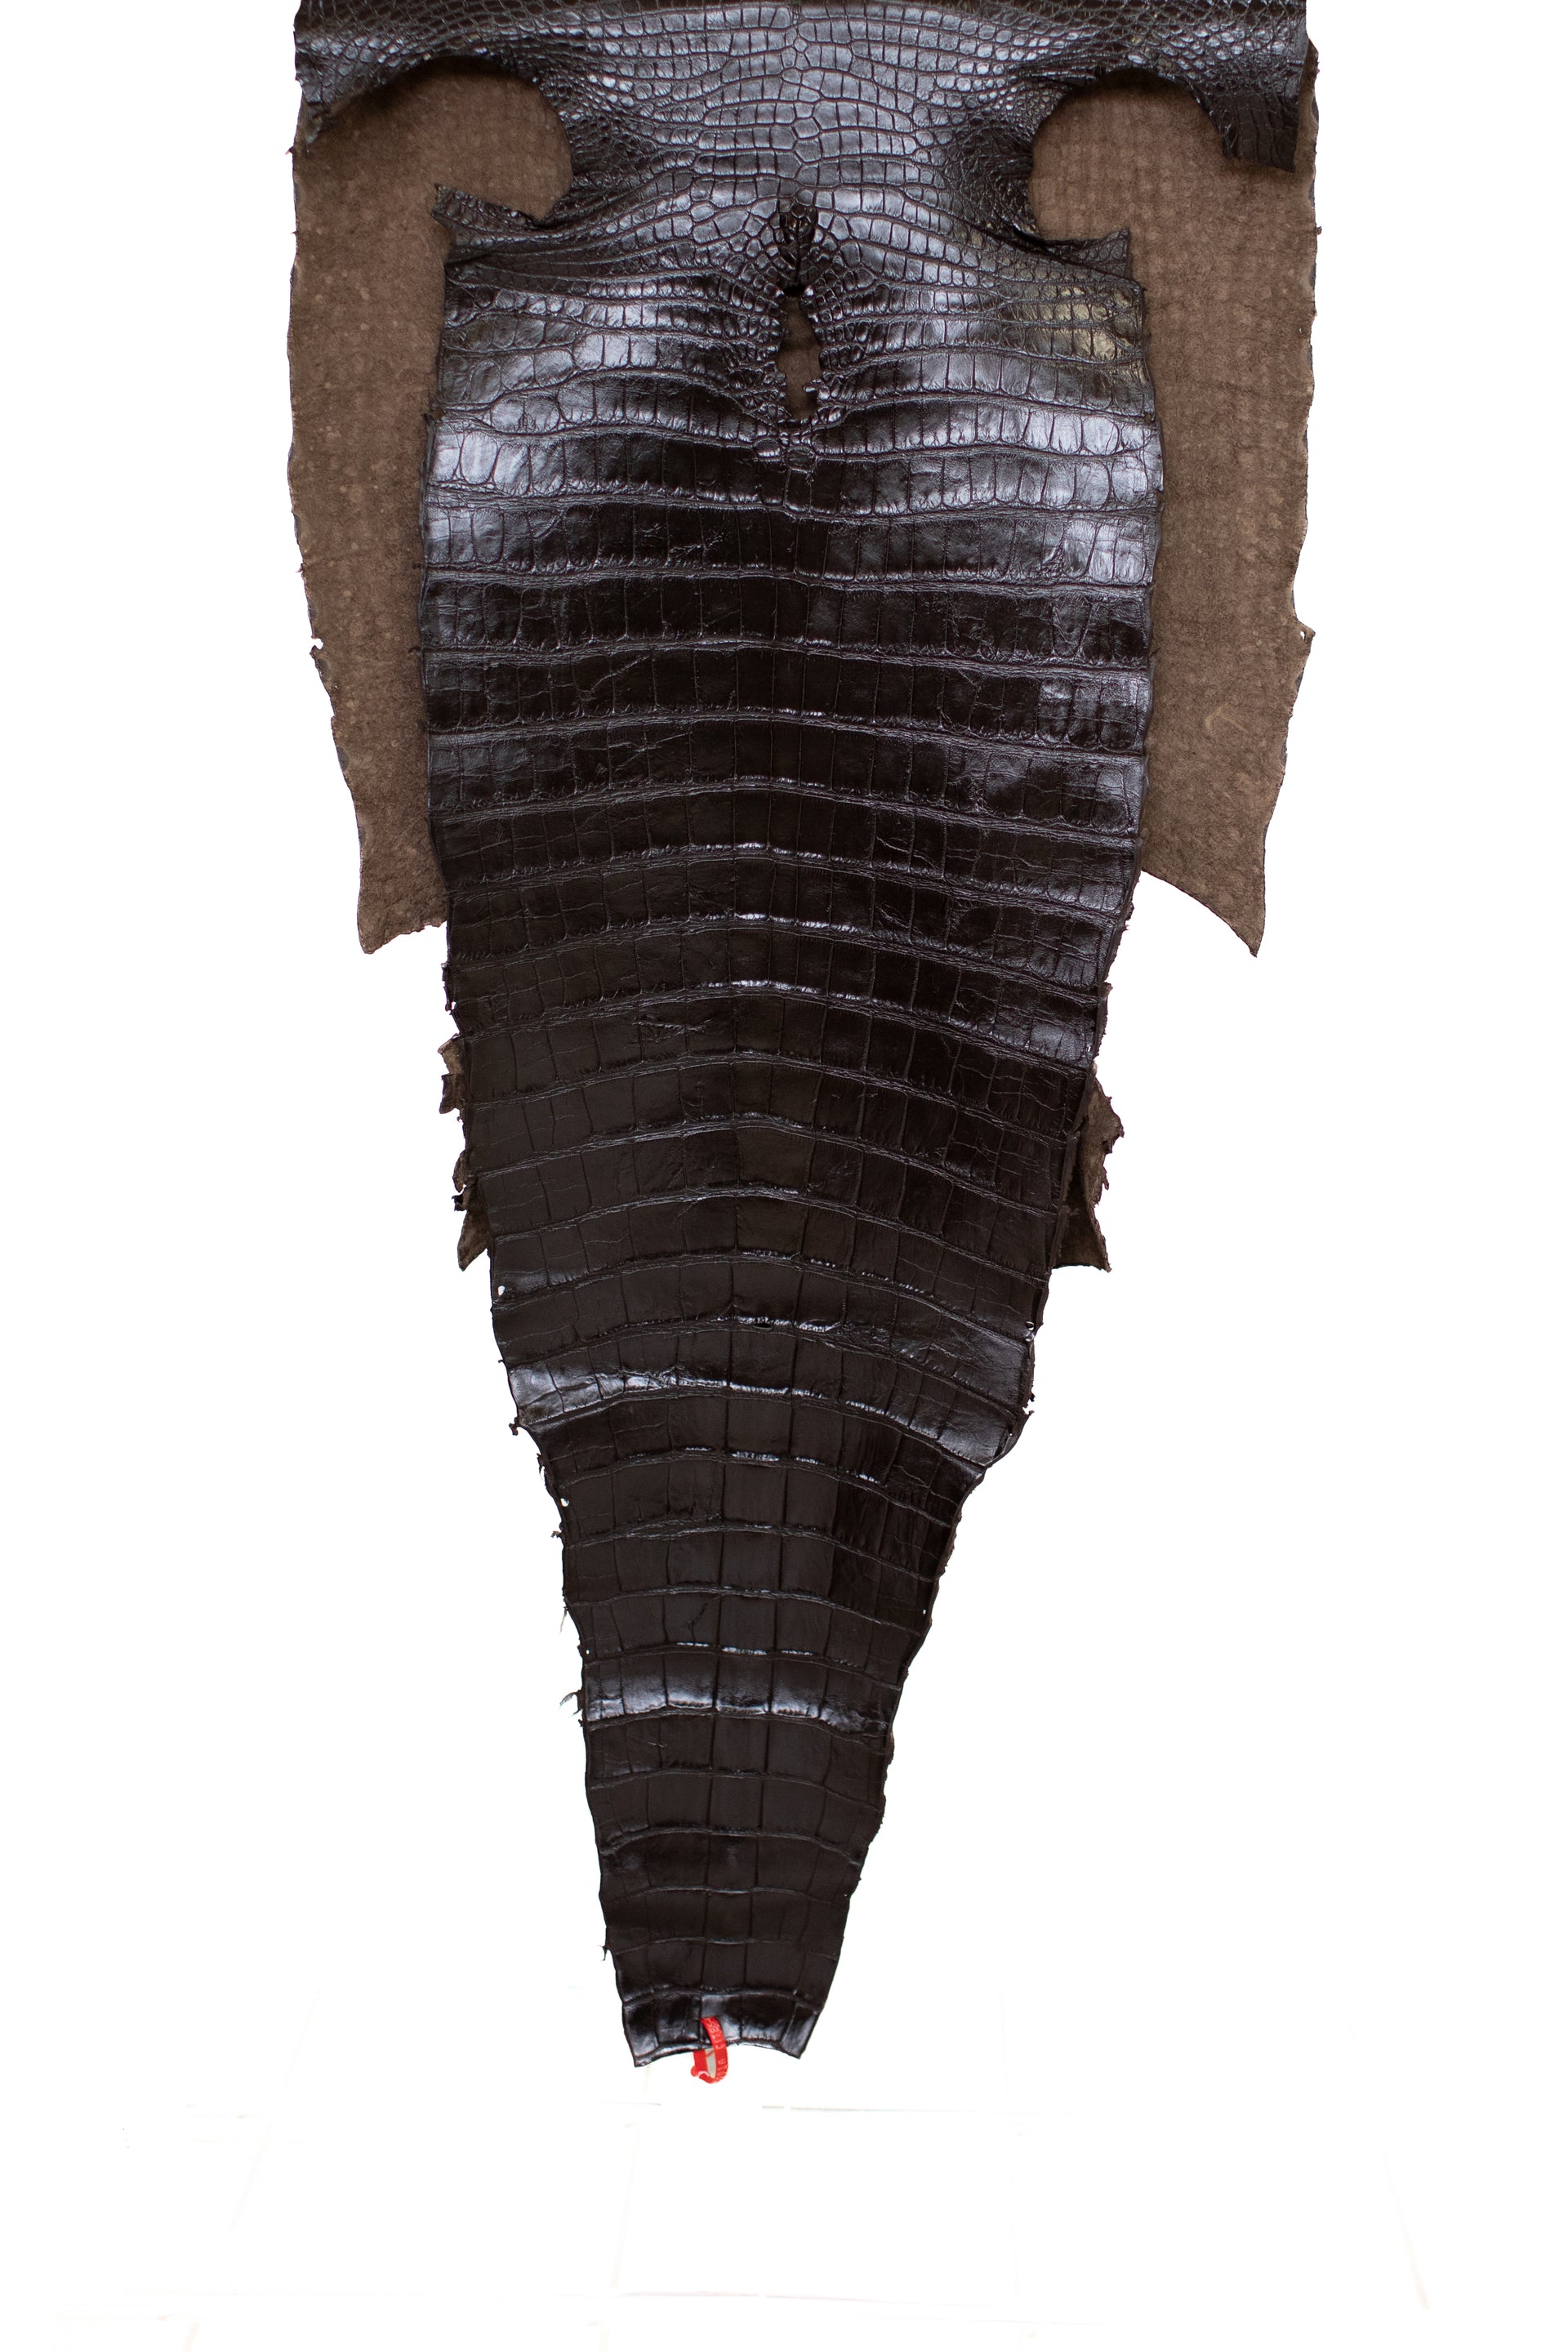 68 cm Grade 2/3 Testa Moro Millennium Wild American Alligator Leather - Tag: ITCC-0539916